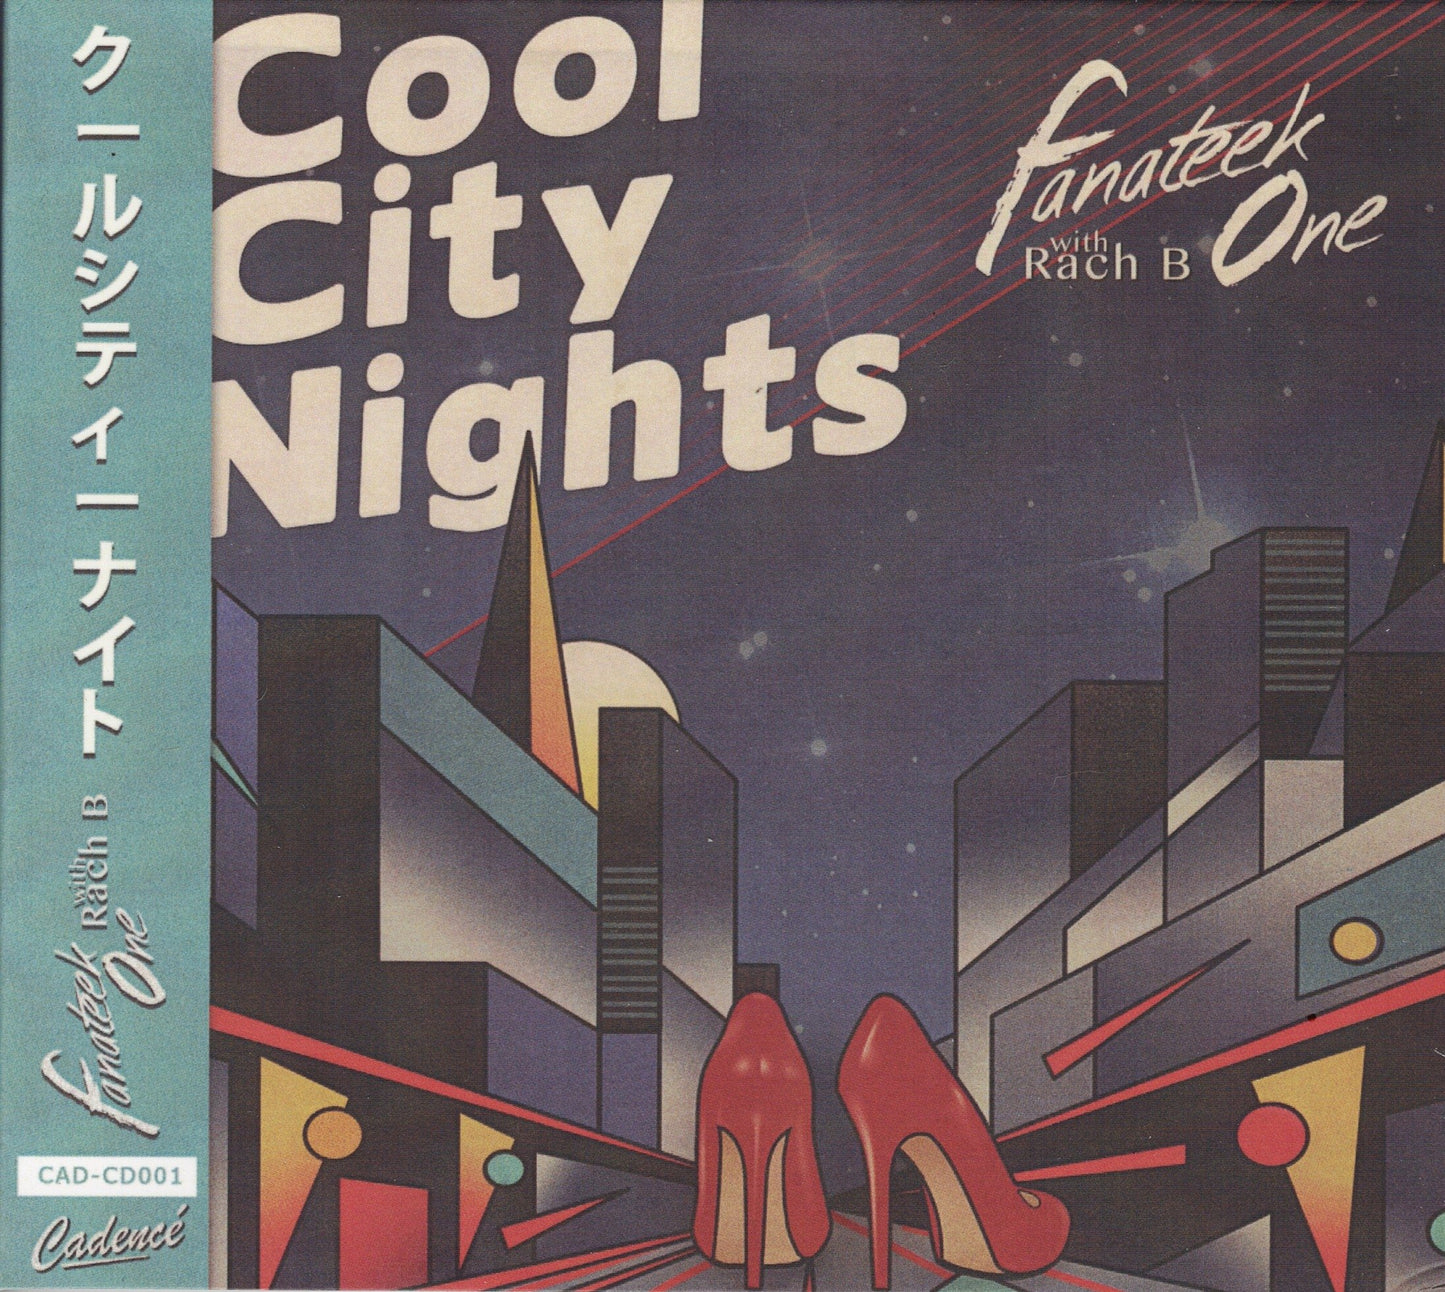 Fanateek One & Rach B - Cool City Nights